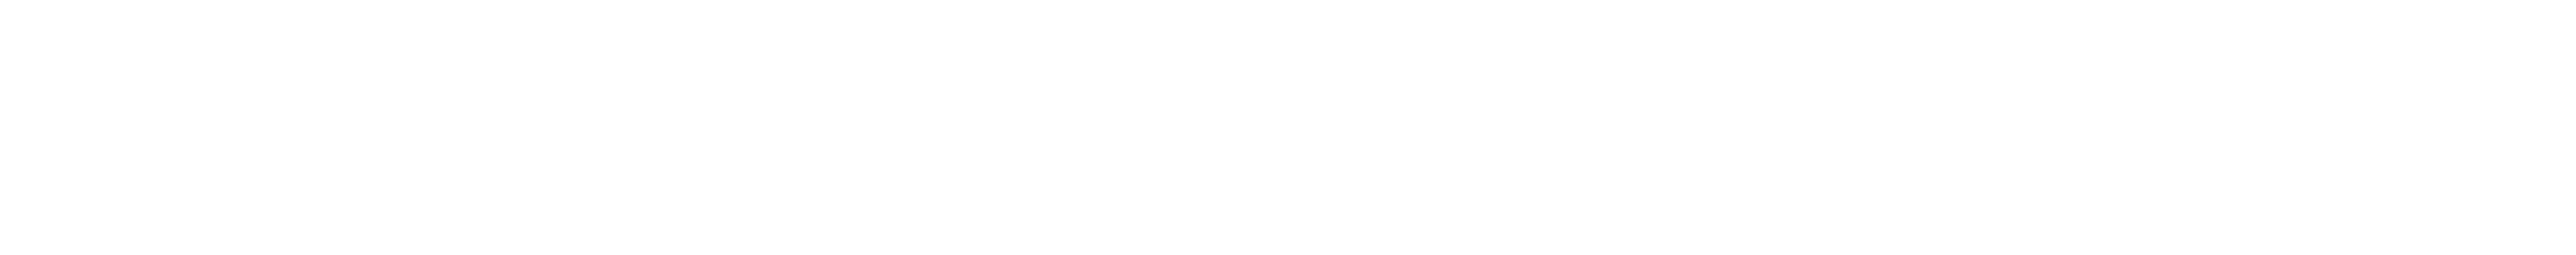 EC wit logo